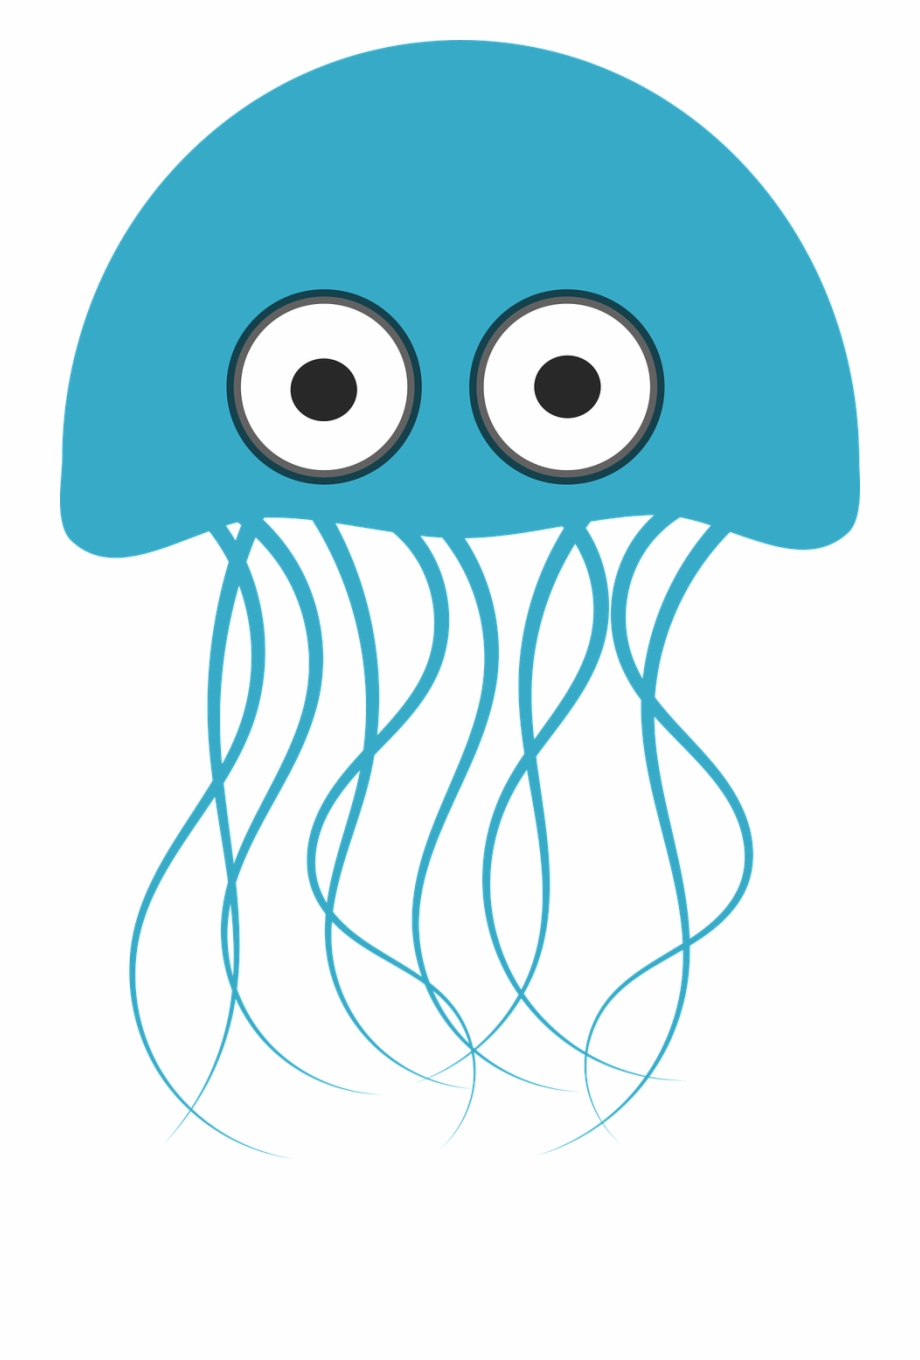 jellyfish clipart ocean life